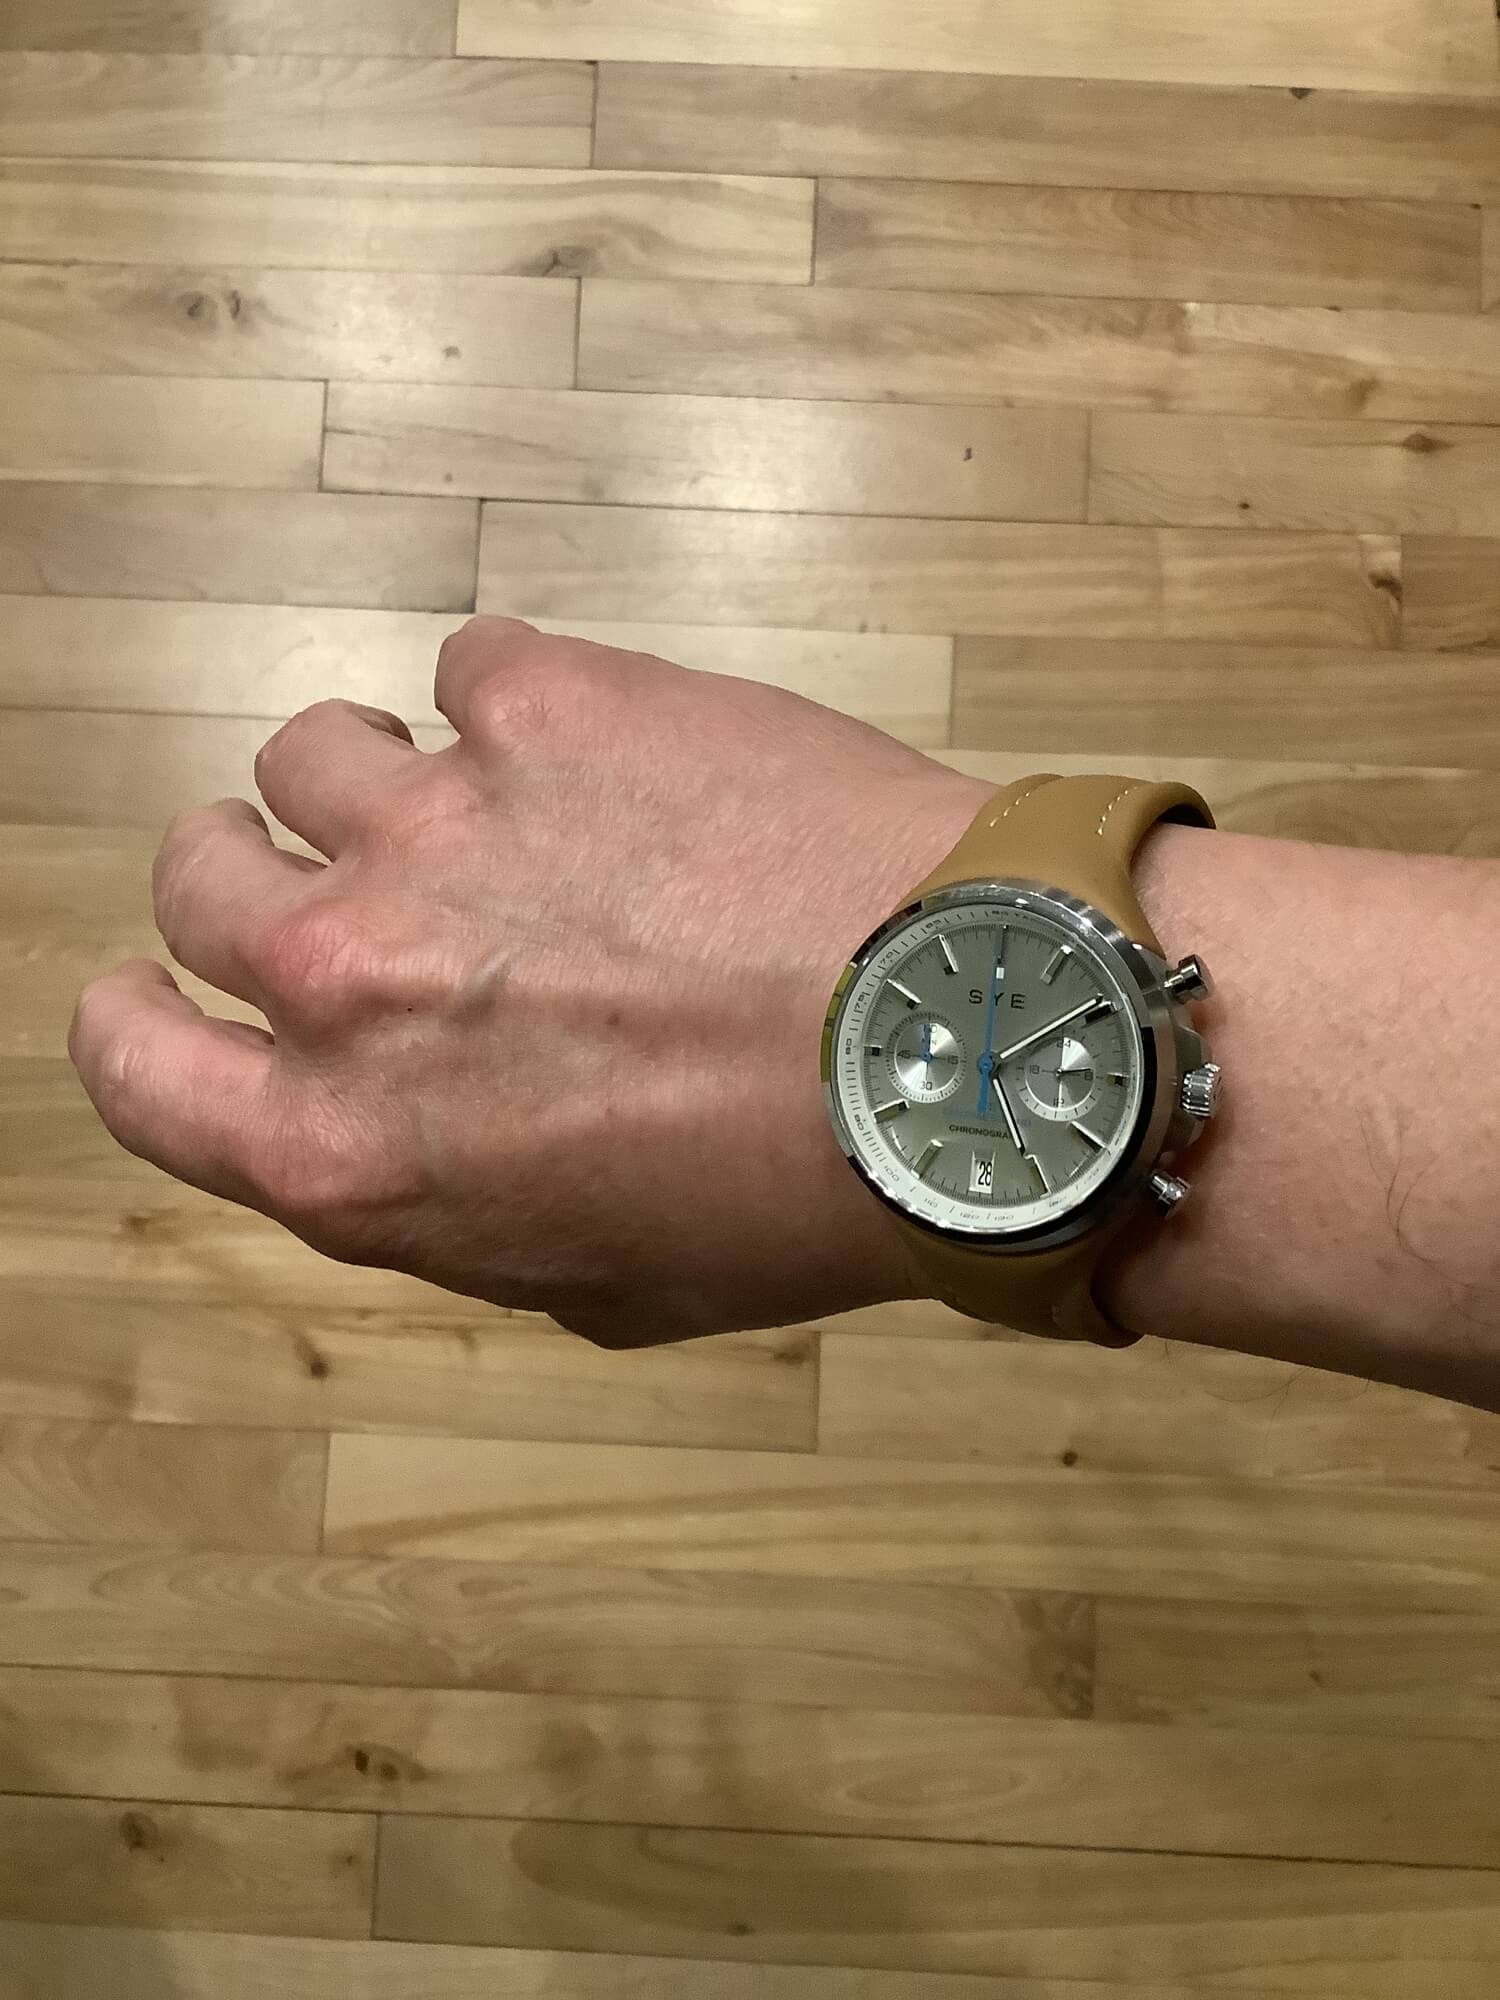 Meet Erick and its SYE MOT1ON Chronograph watch